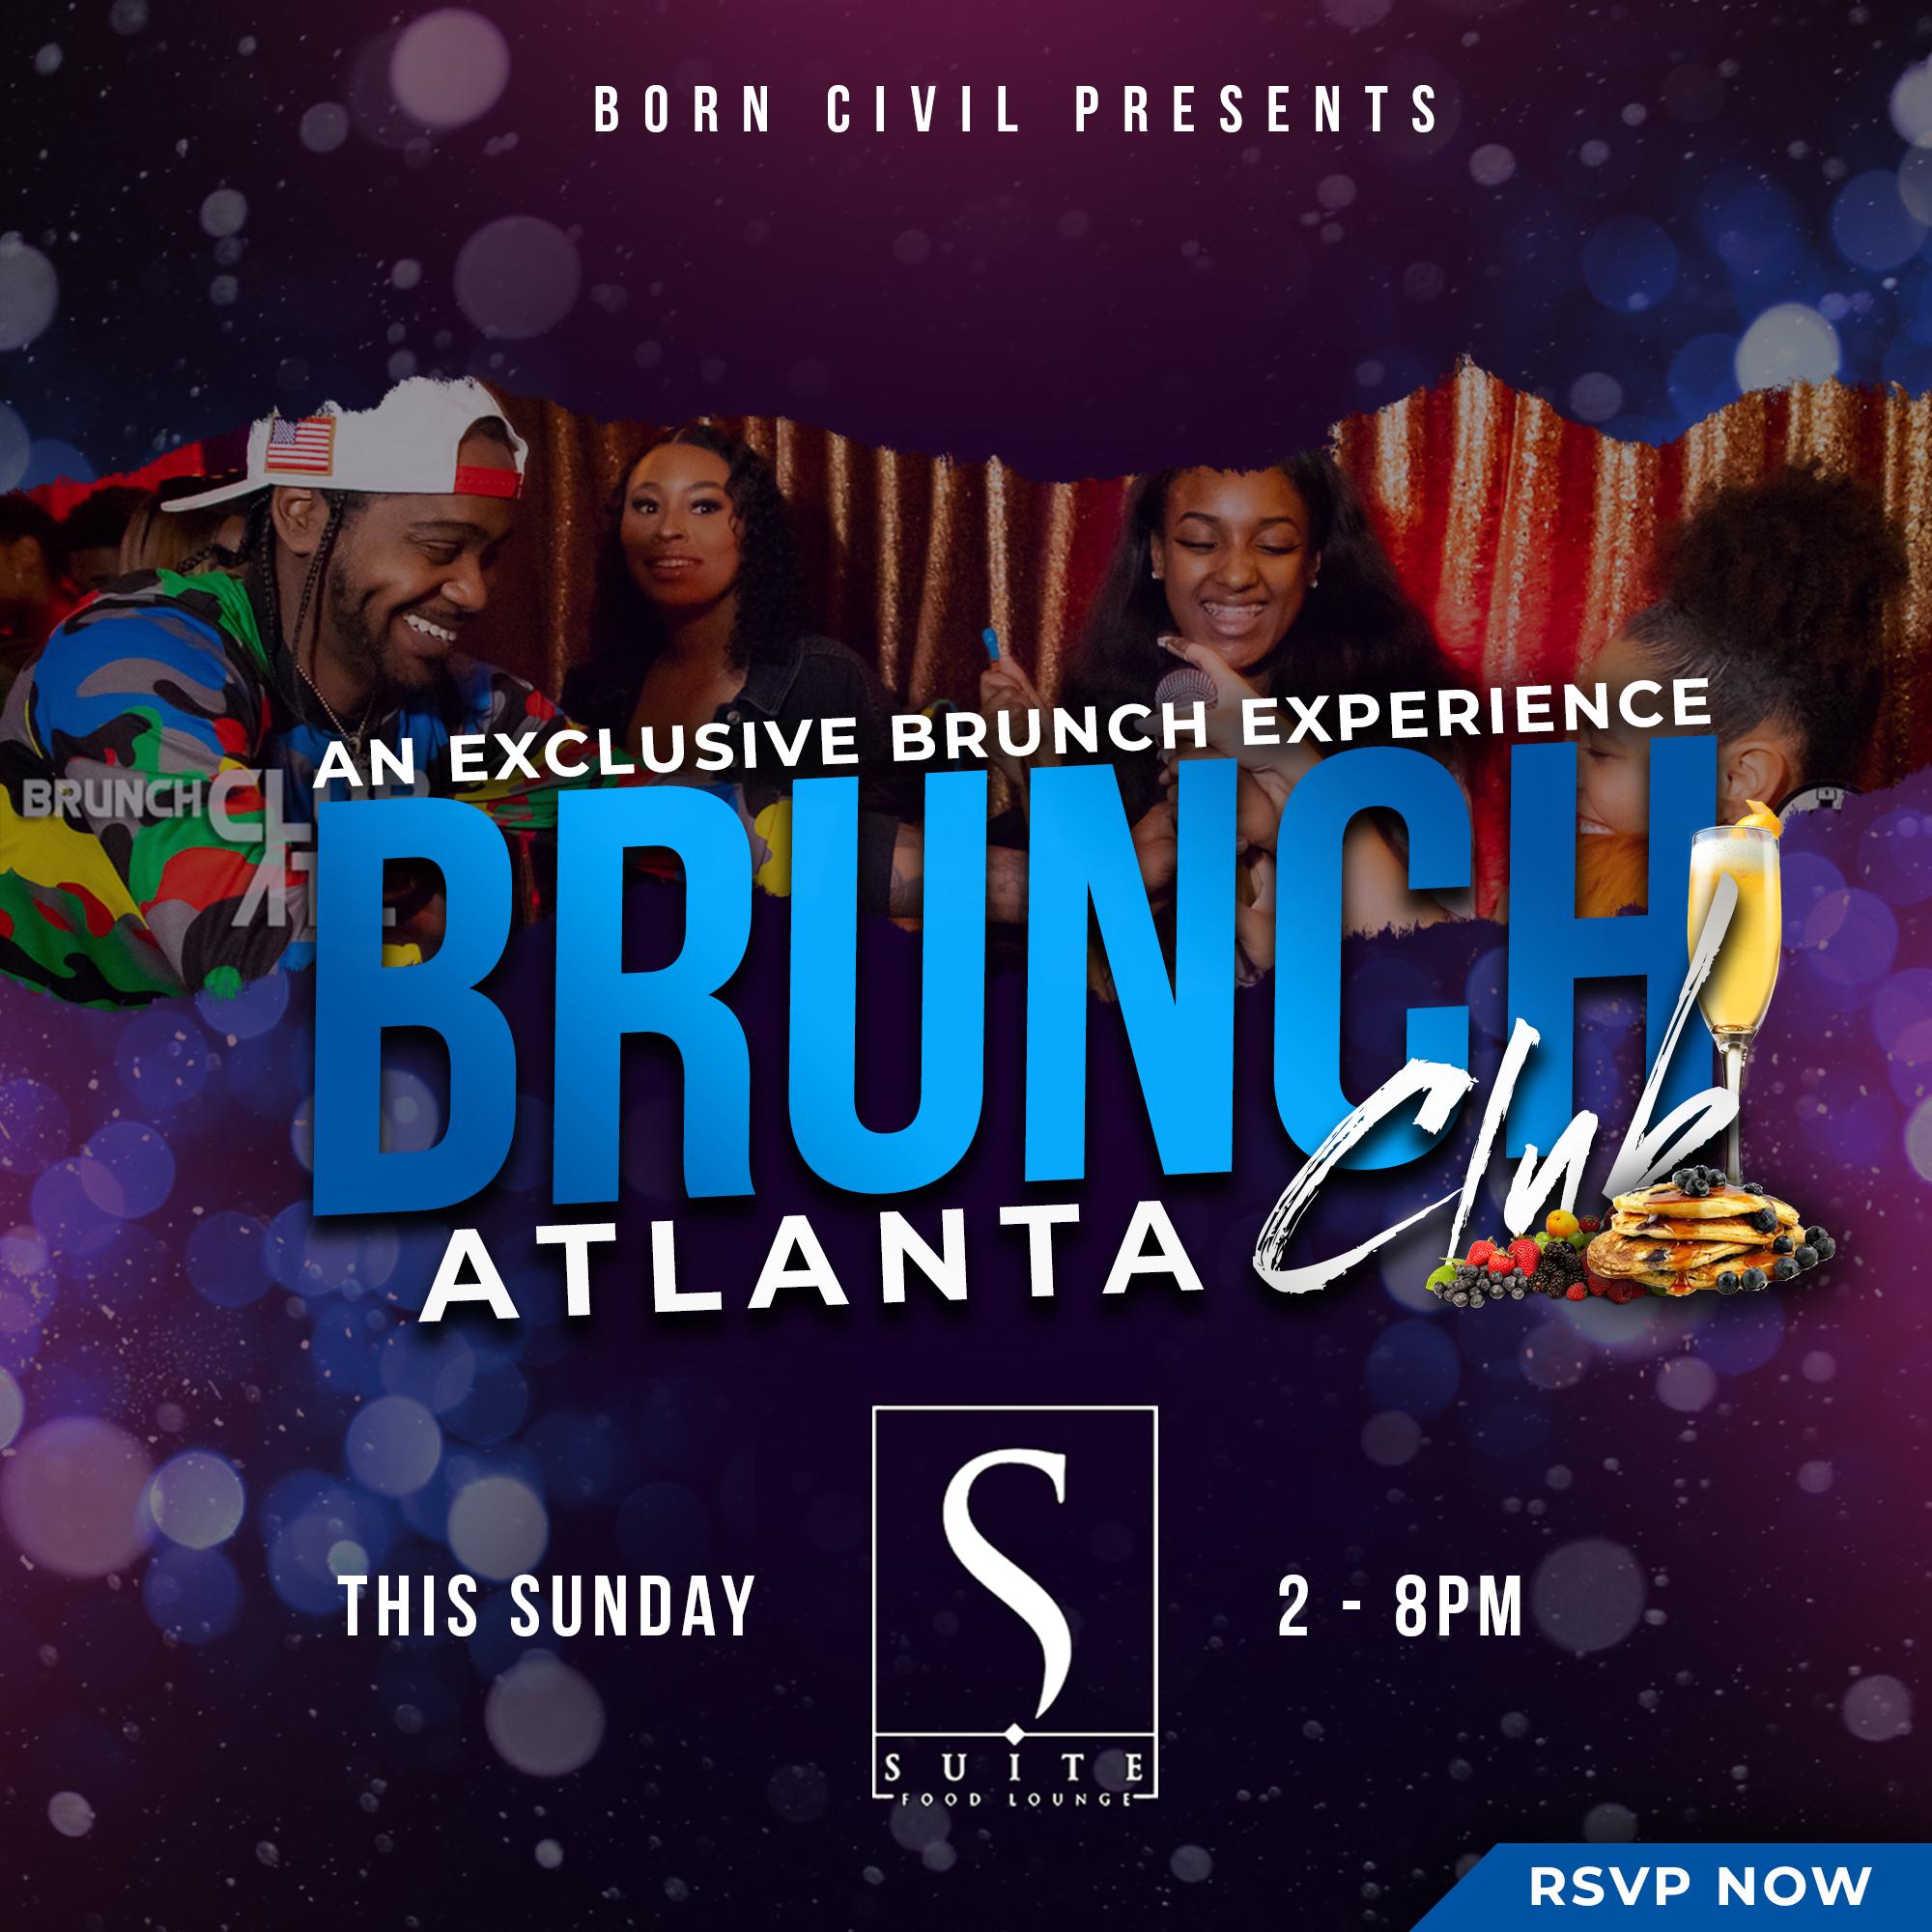 Rooftop Brunch @ Brunch Club Atlanta - The Premiere Brunch Party Experience